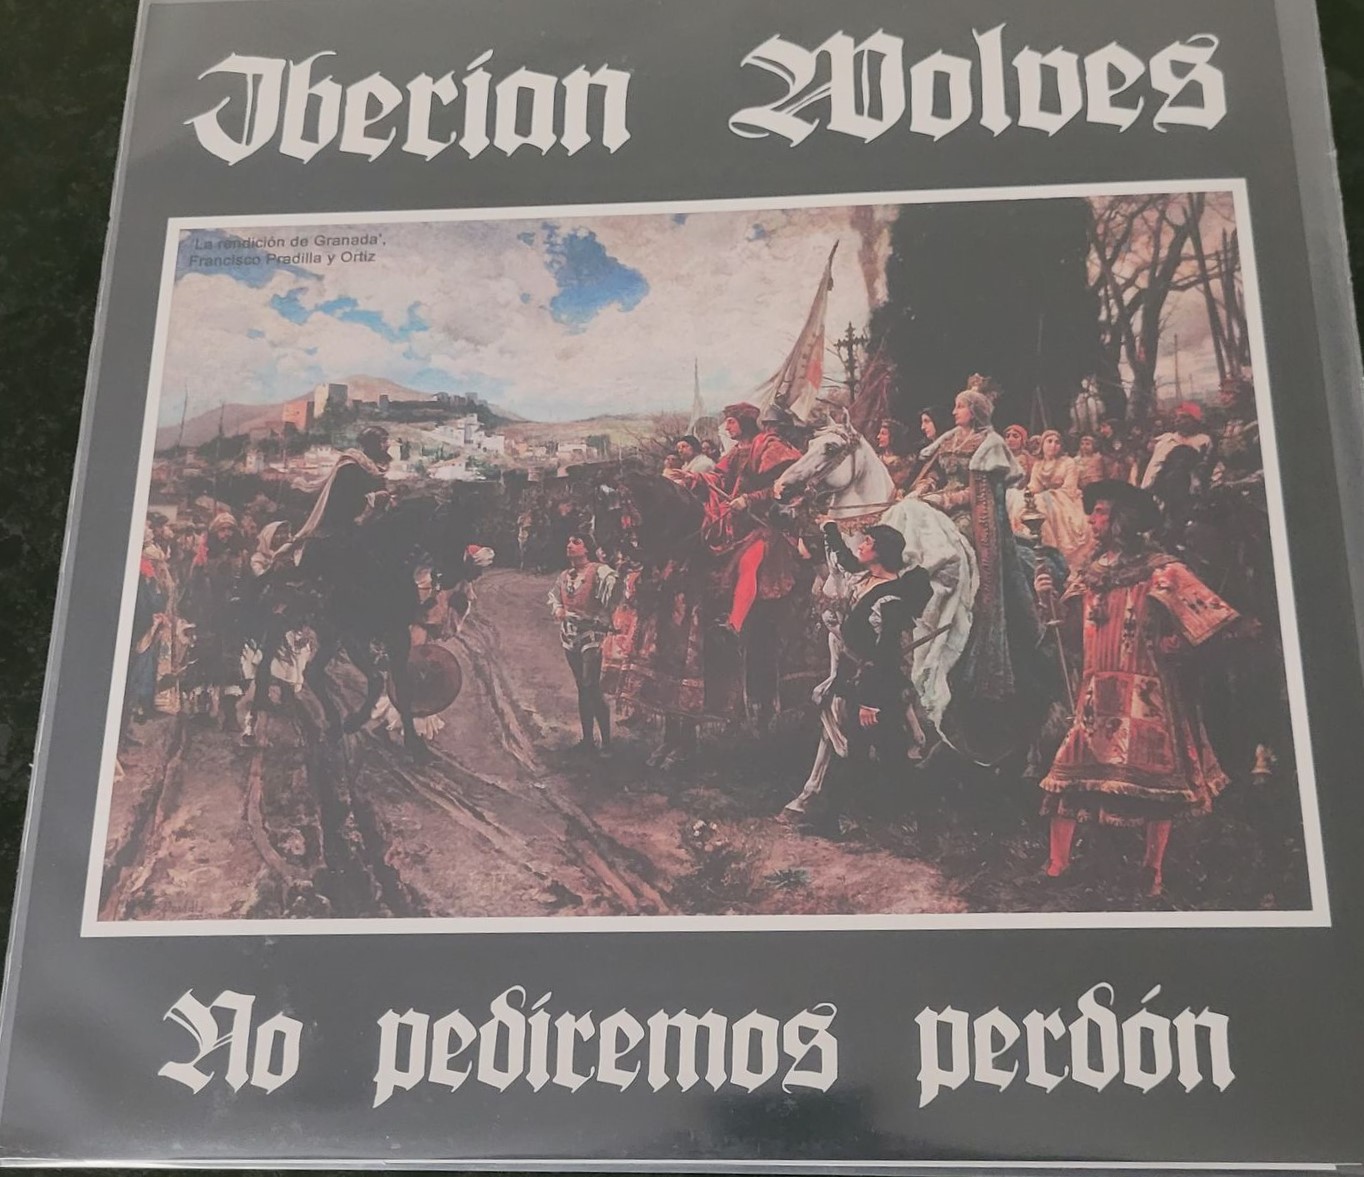 Iberian Wolves "No Pediremos Perdón" TP LP